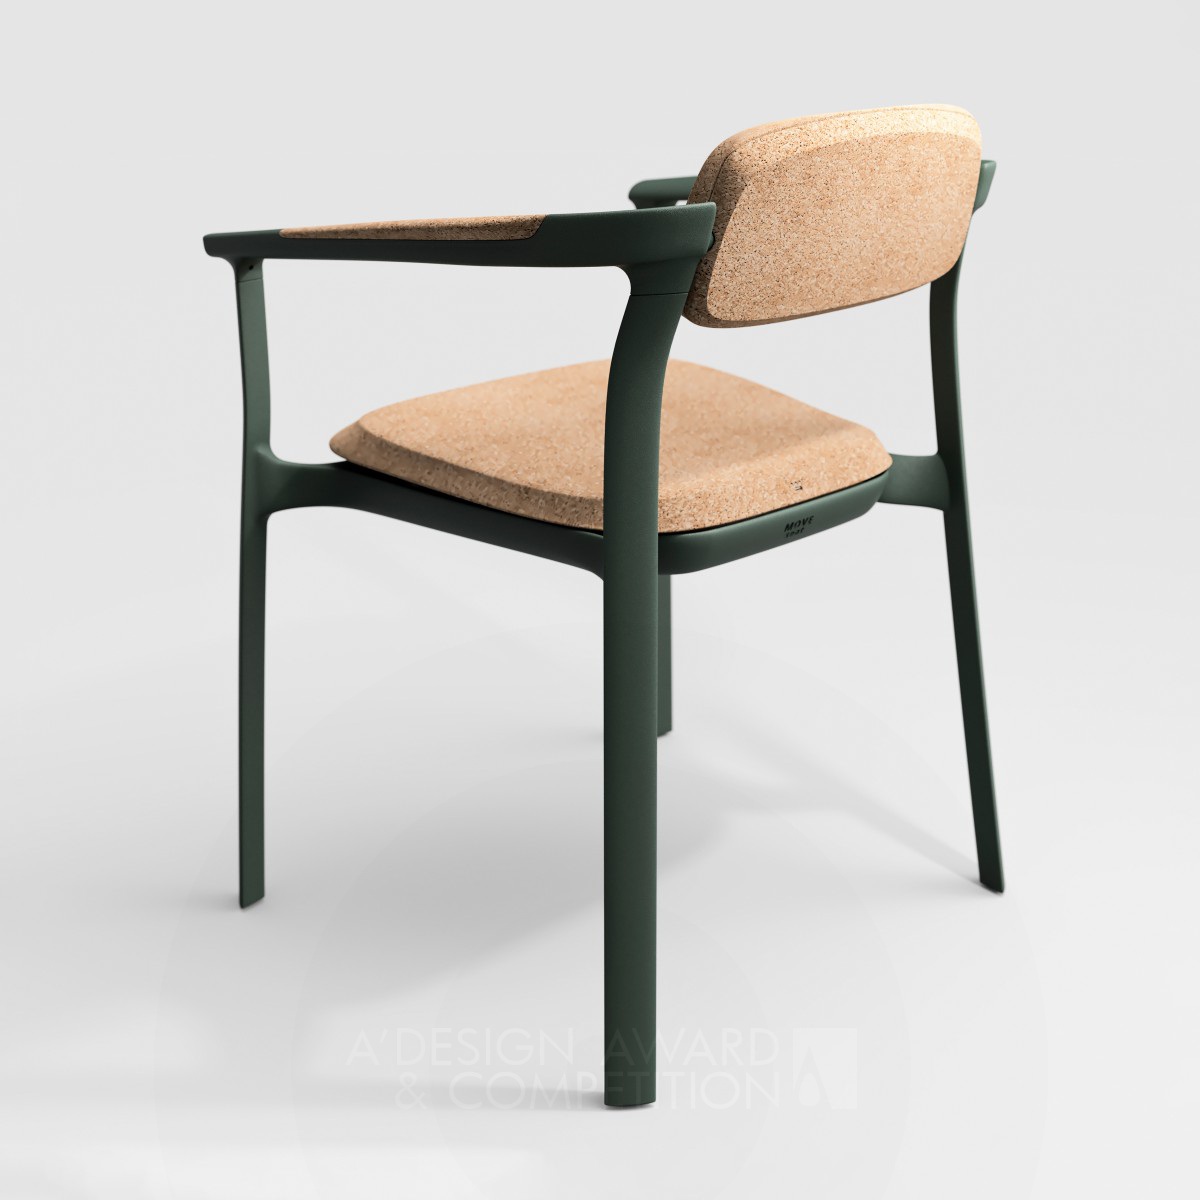 Ariel Śliwiński wins Bronze at the prestigious A' Furniture Design Award with Move Chair.